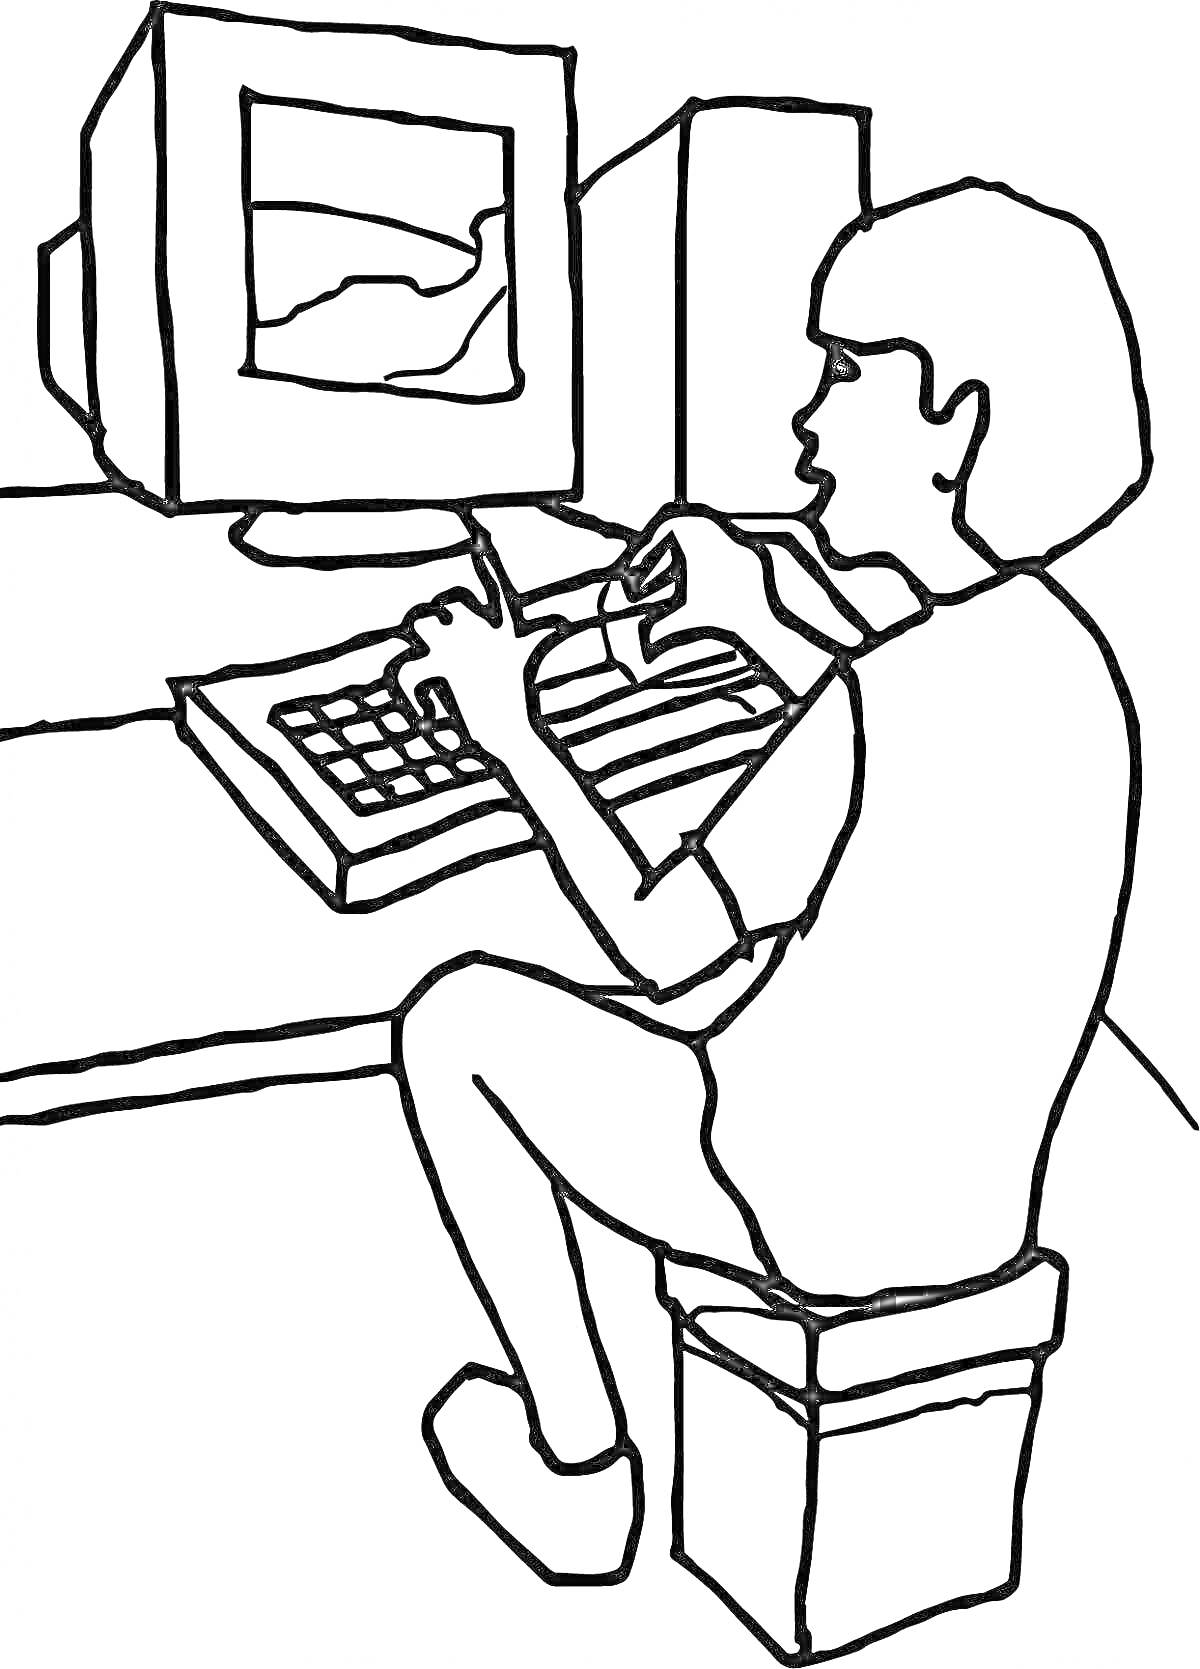 На раскраске изображено: Ребёнок, Компьютер, Монитор, Клавиатура, Мышь, Стул, Стол, Технология